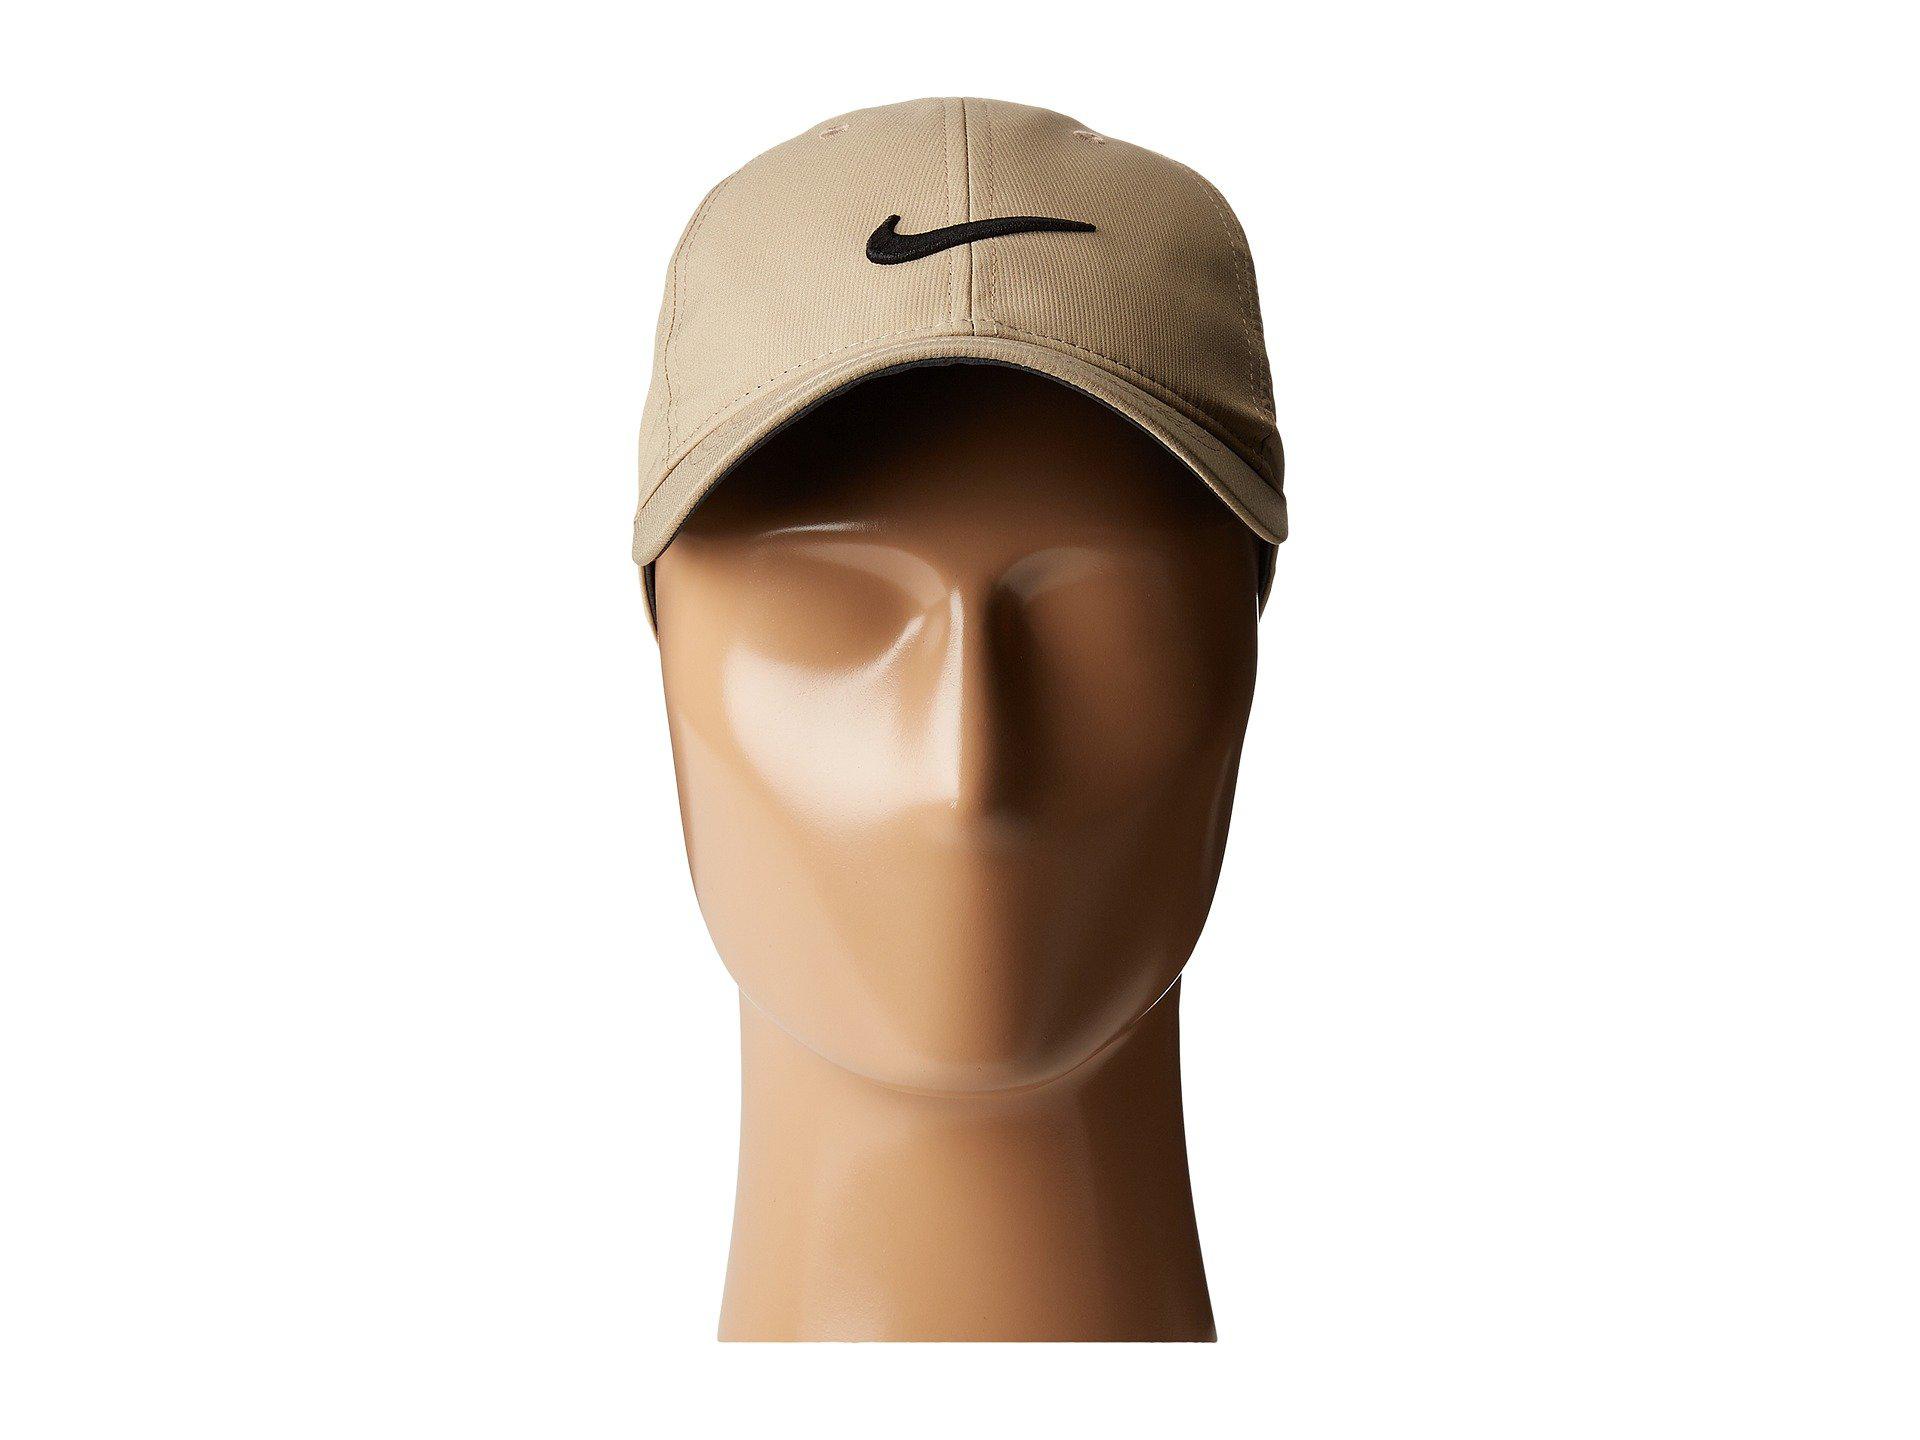 Nike Synthetic Legacy 91 Tech Cap in Khaki/Black (Natural) for Men - Lyst